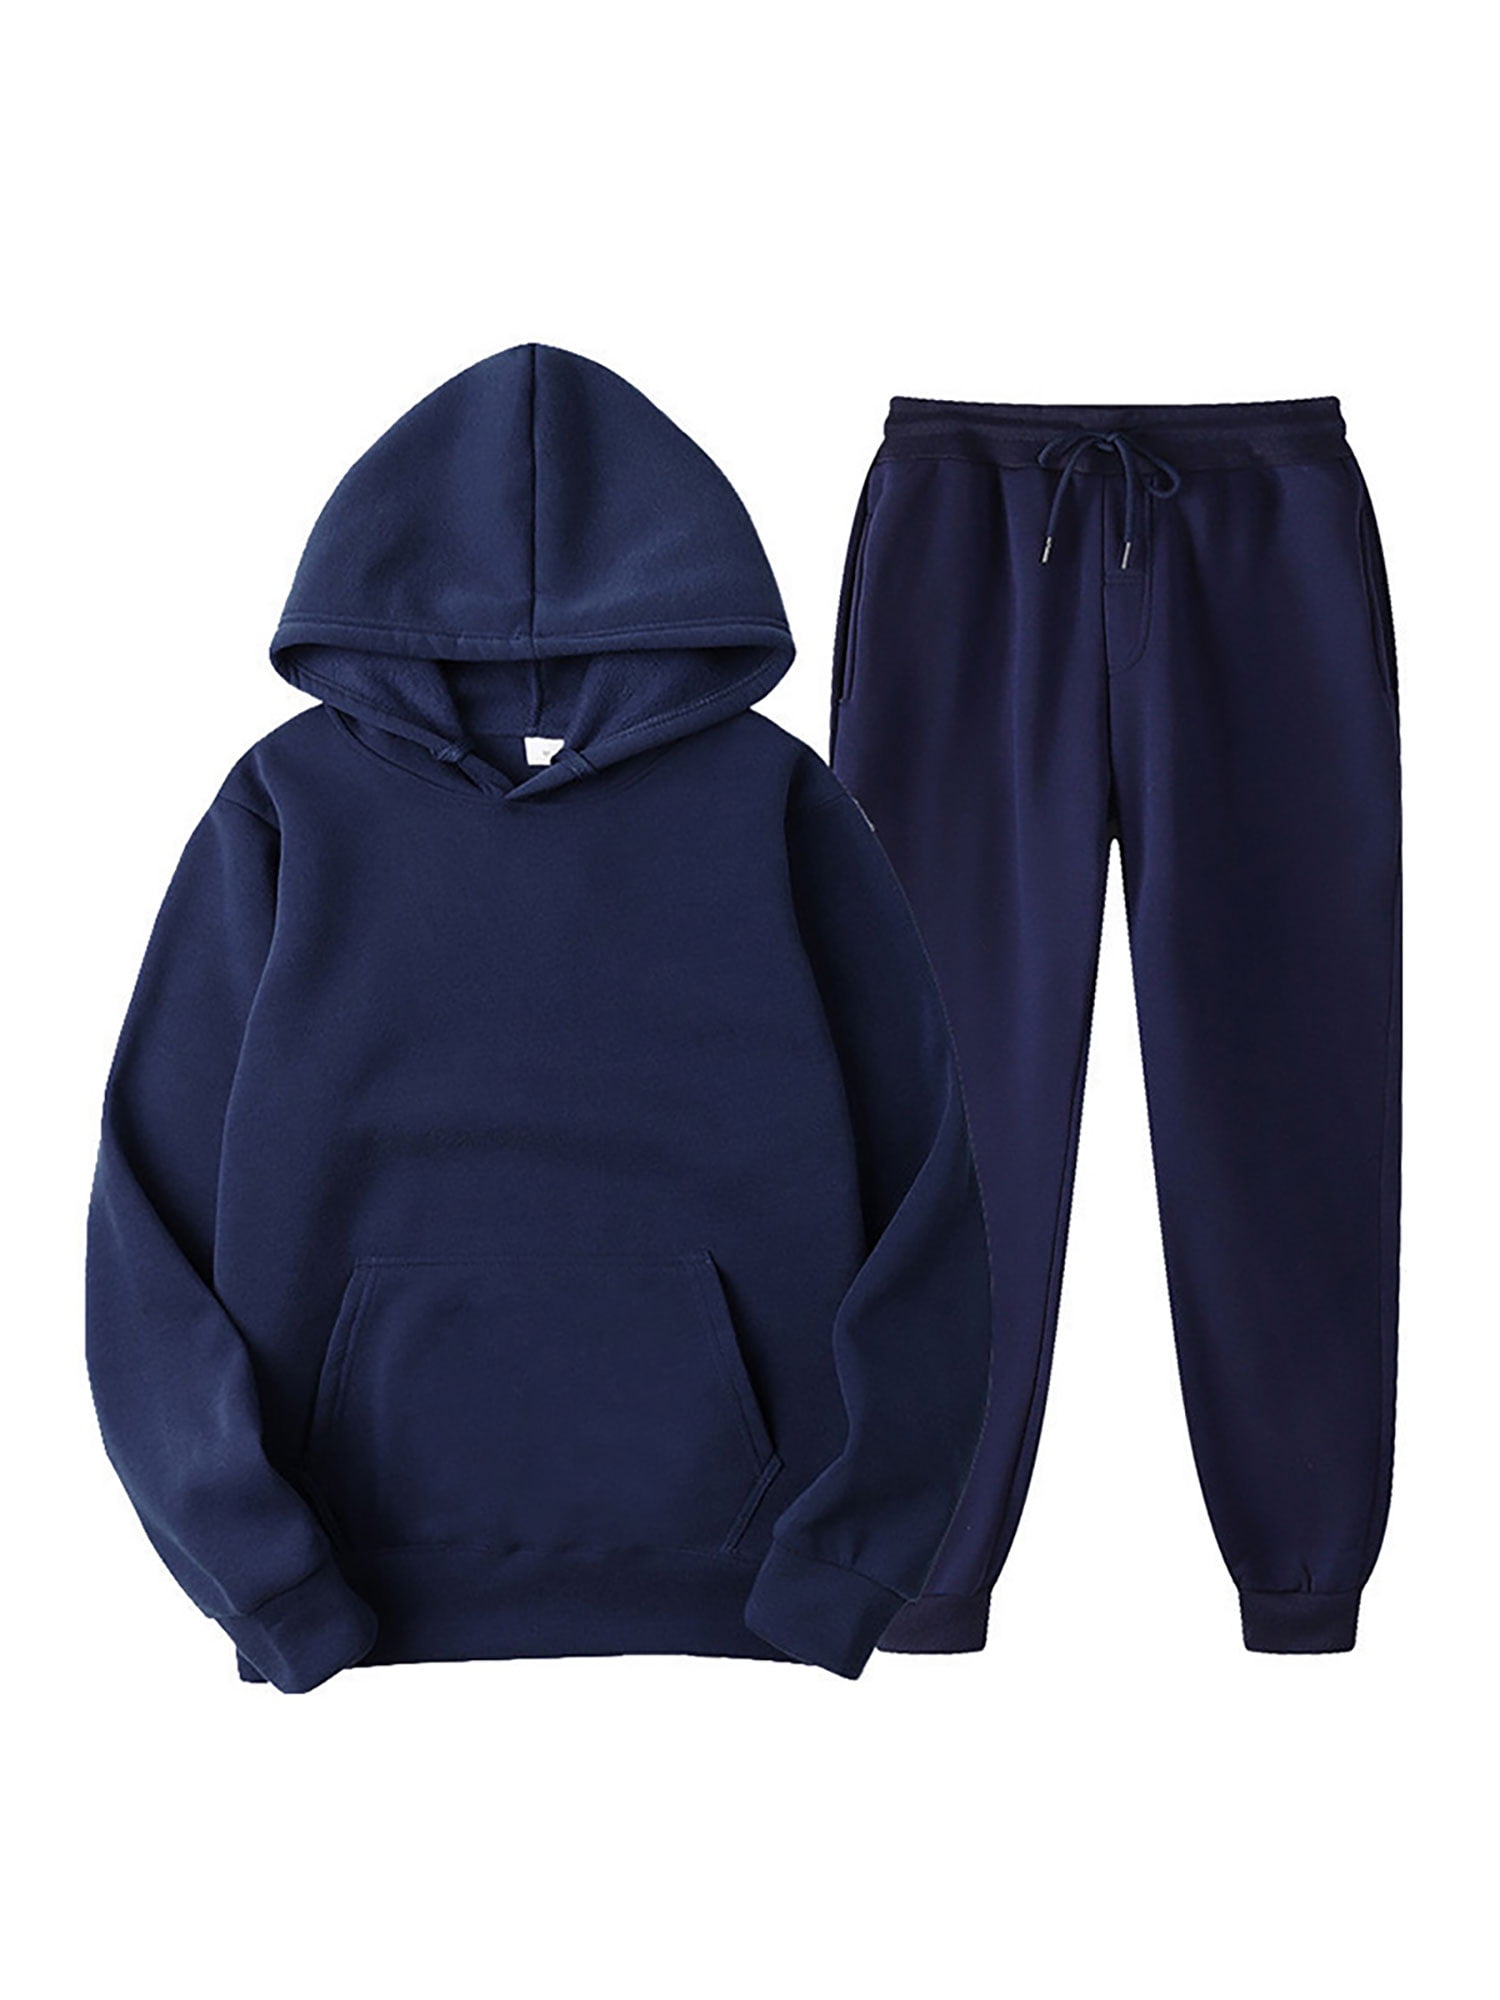 Capreze Drawstring Jogger Sets With Pockets Tracksuit Set for Mens Regular  Fit Hooded Loungewear Workout Hoodies Sweatsuit Royal Blue 3XL 